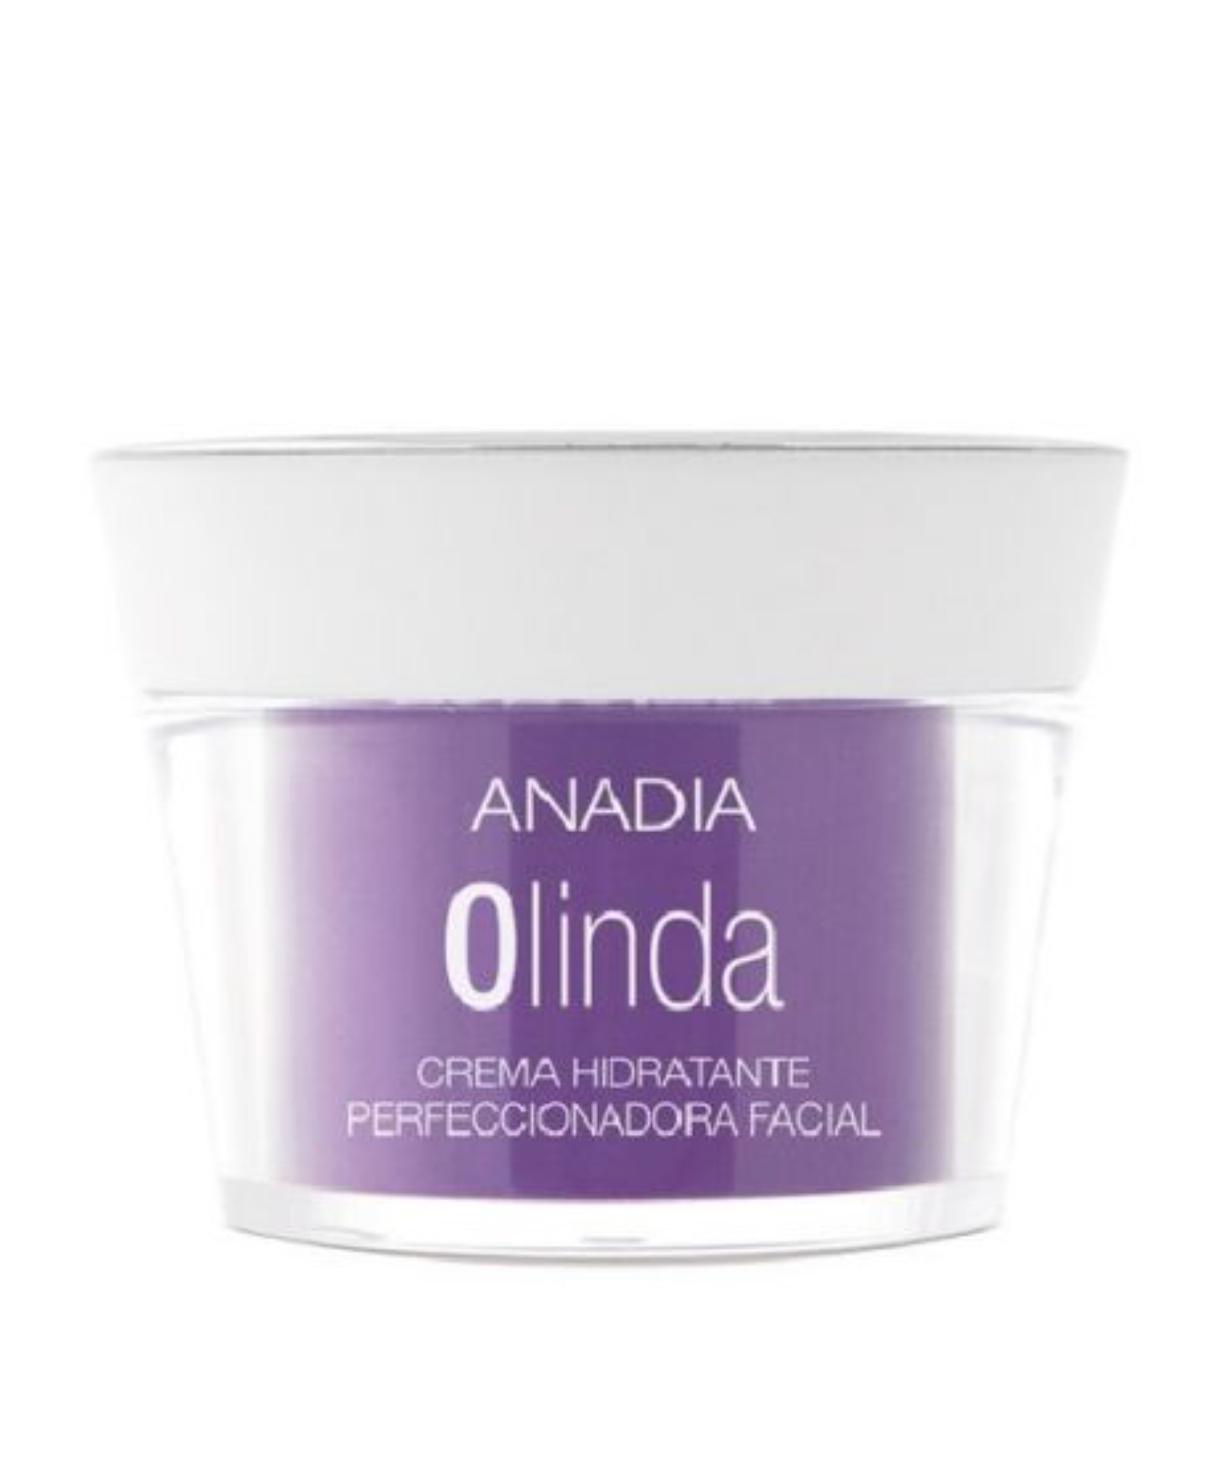 “Olinda” Crema perfeccionadora facial 50ml Anadia